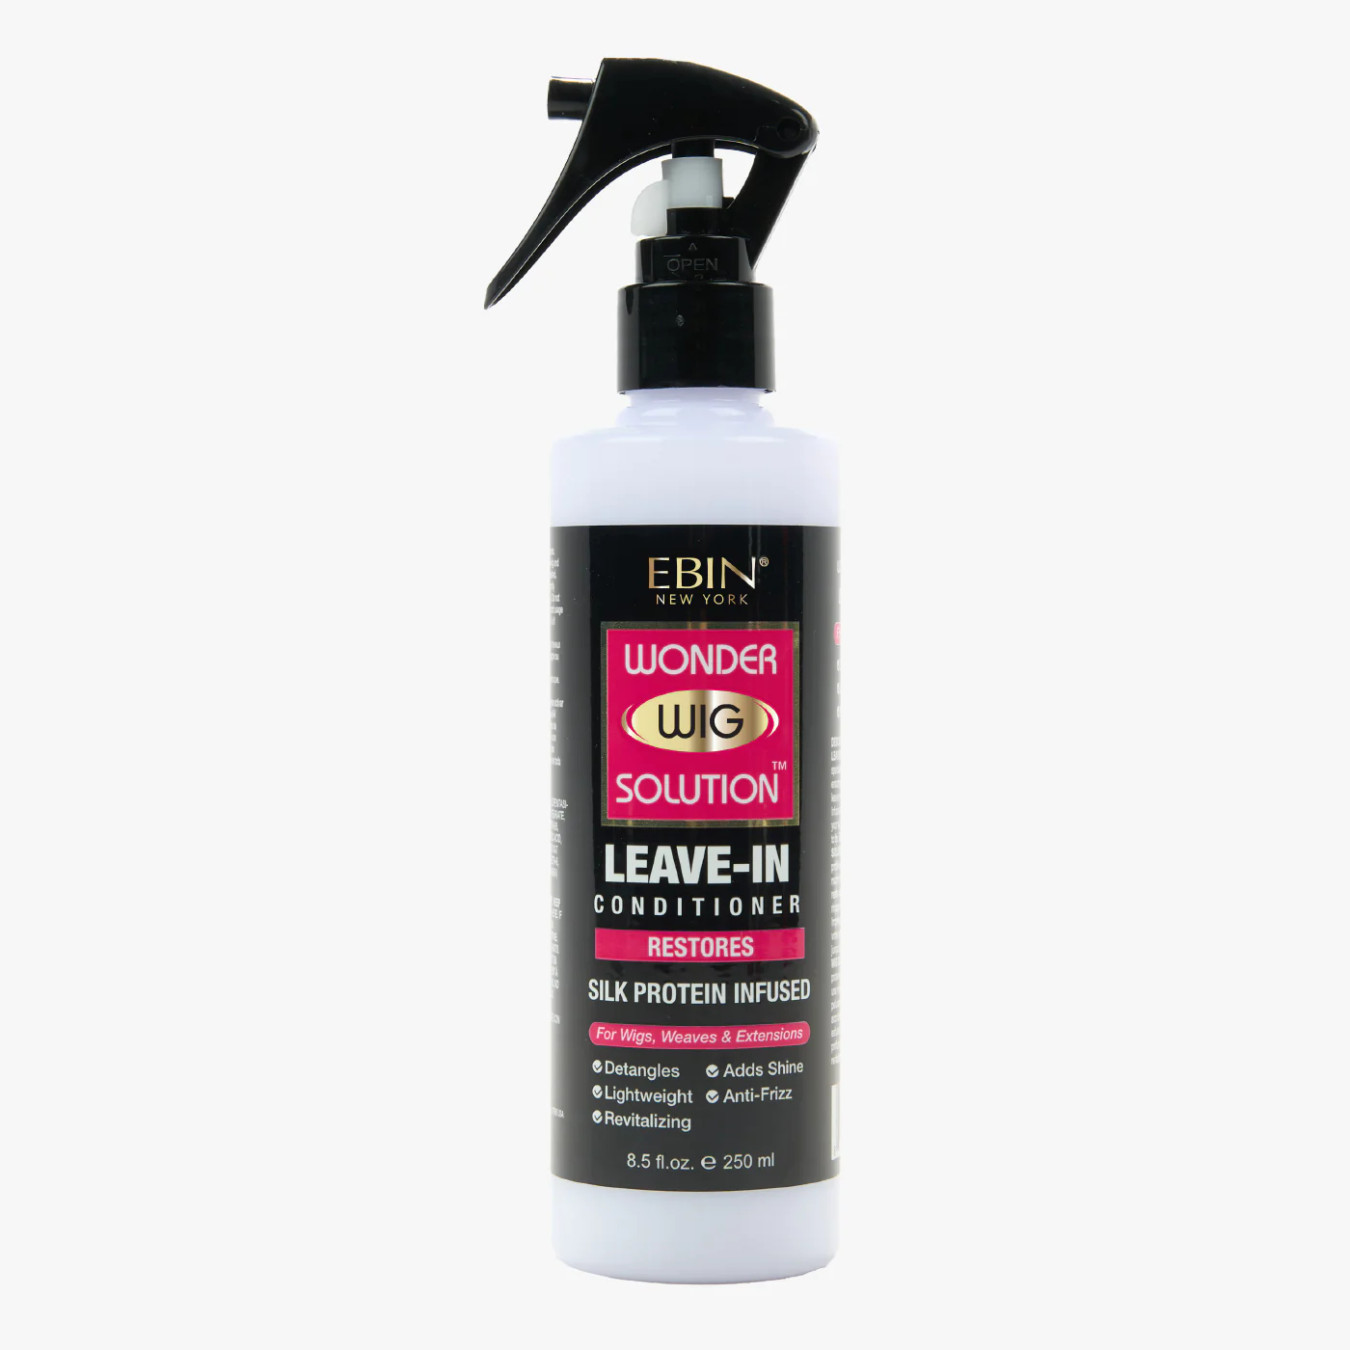 Ebin New York Wonder Wig Solution Leave-In Conditioner Spray (8.5 oz)